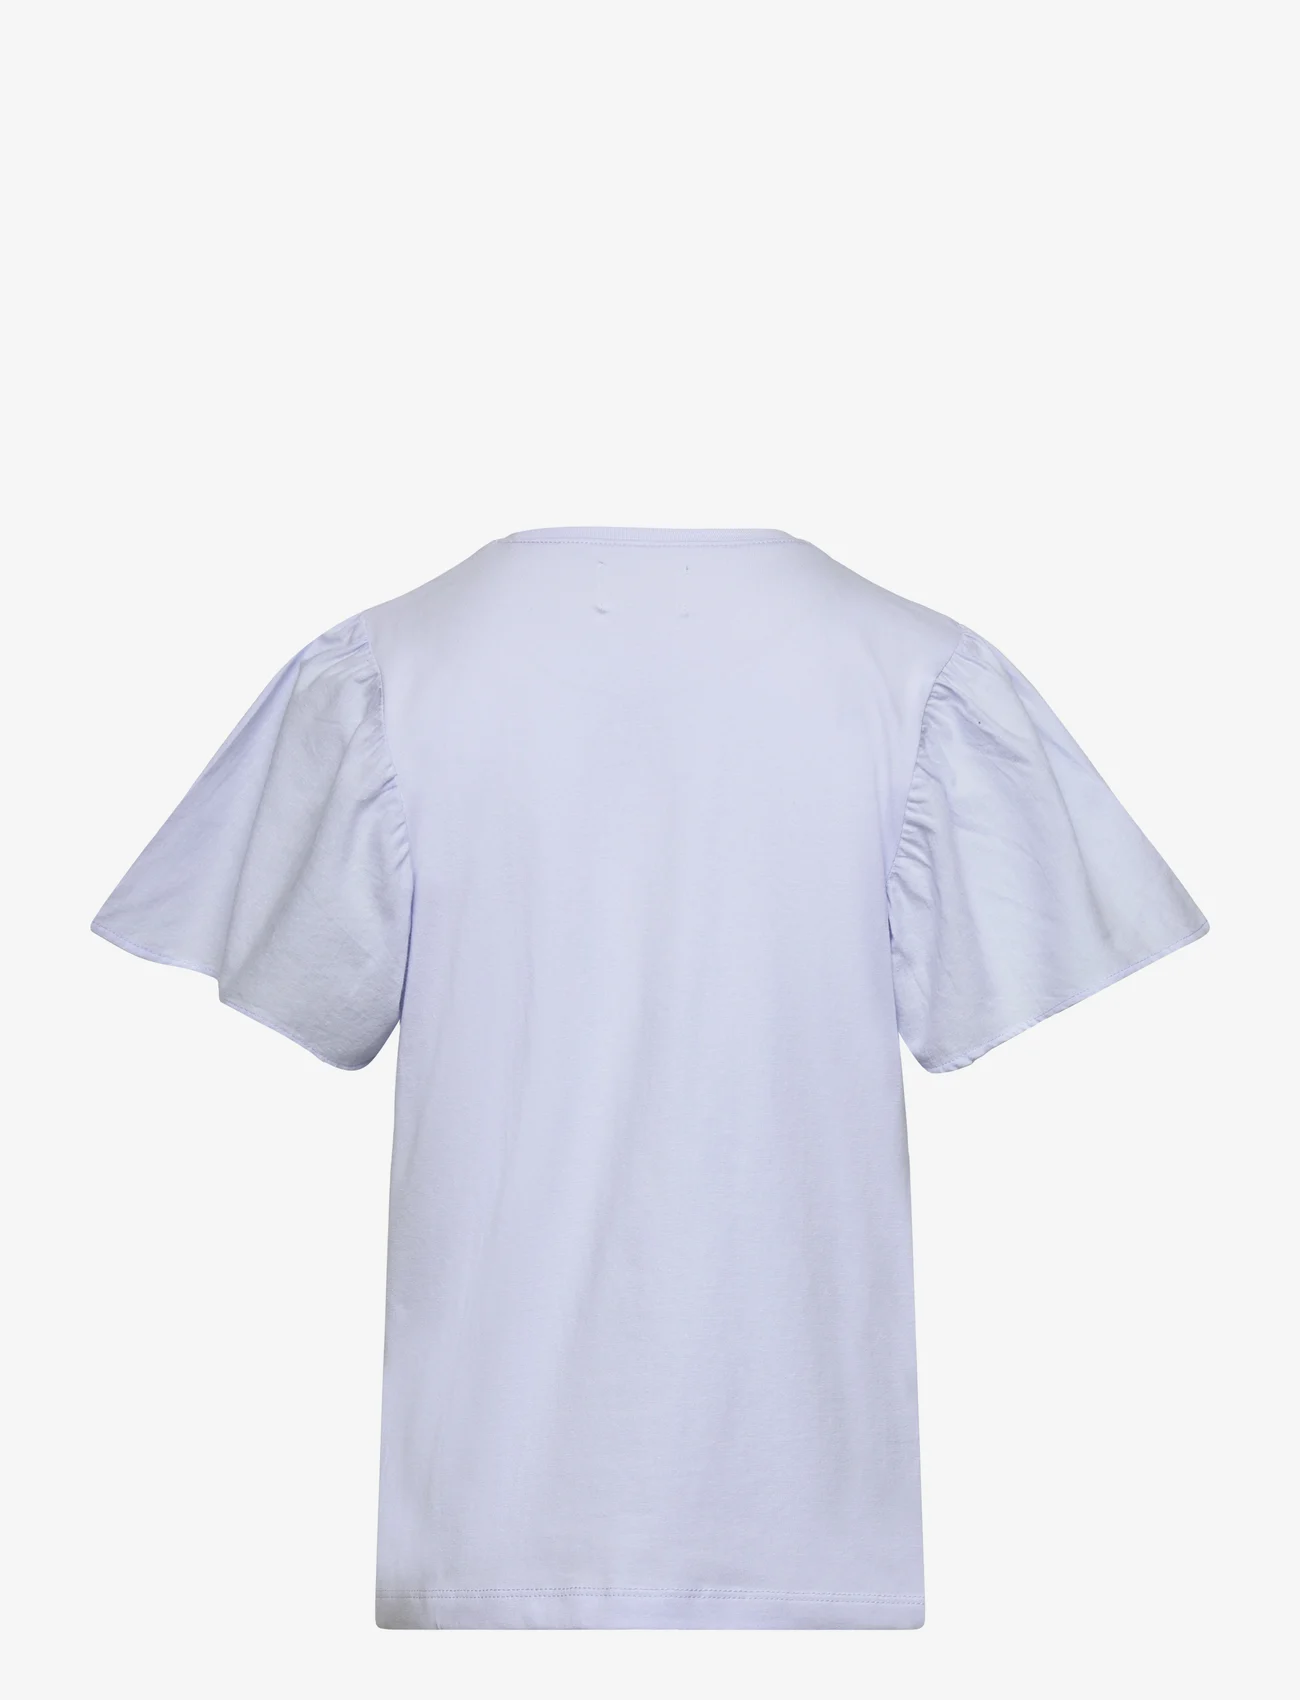 Creamie - T-shirt SS Woven - kortärmade - xenon blue - 1